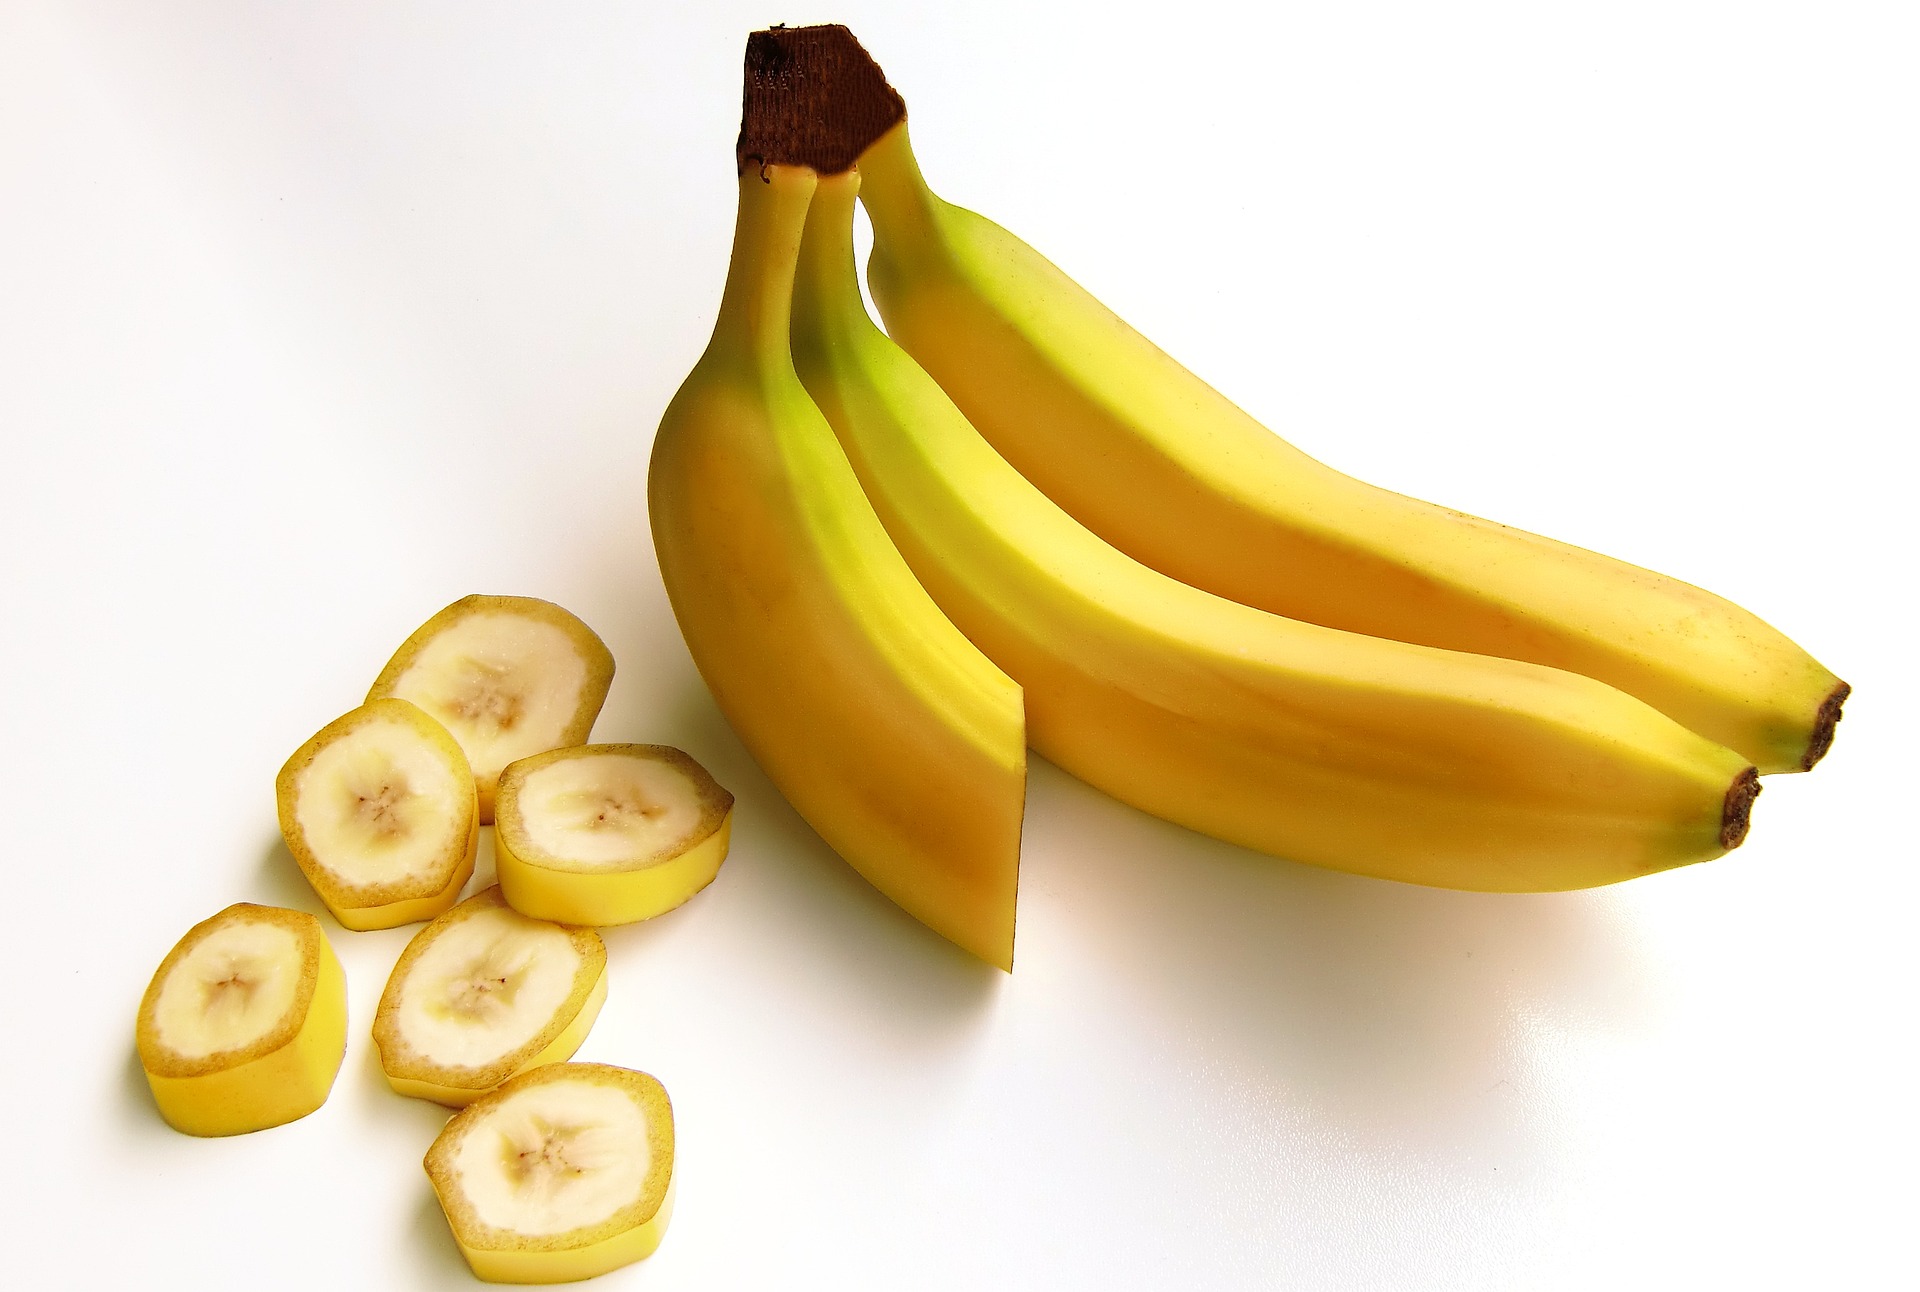 8 Myths About Eating Banana